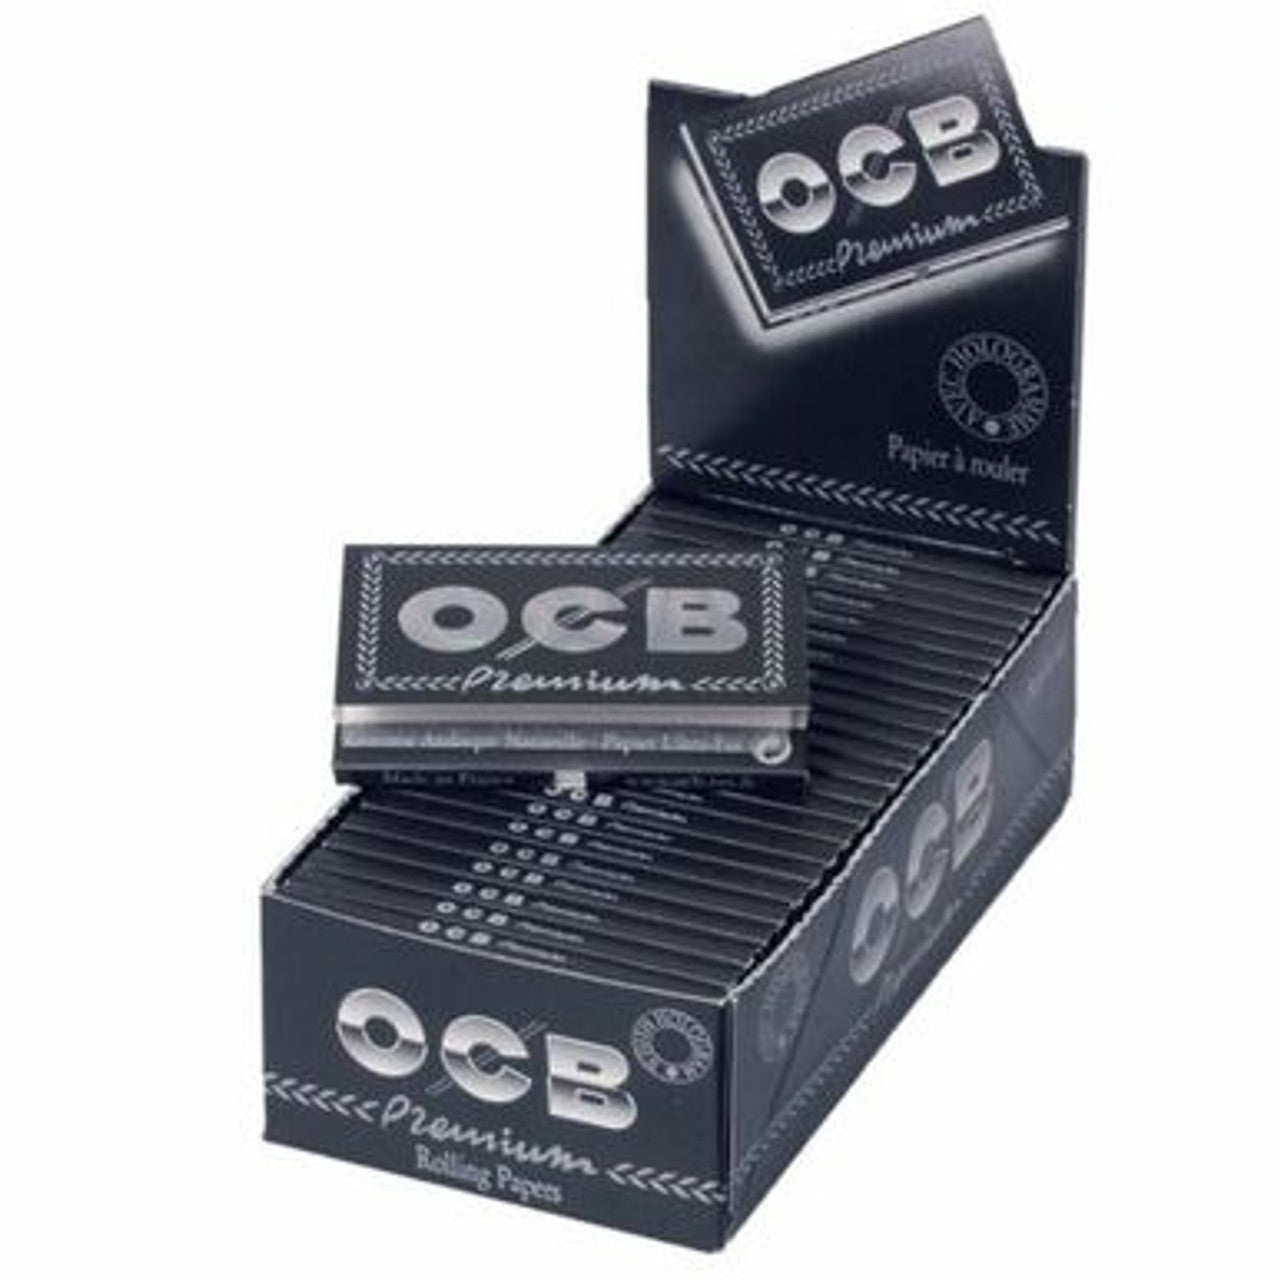 OCB Premium Single Wide Double Widow Rolling Papers - 25ct